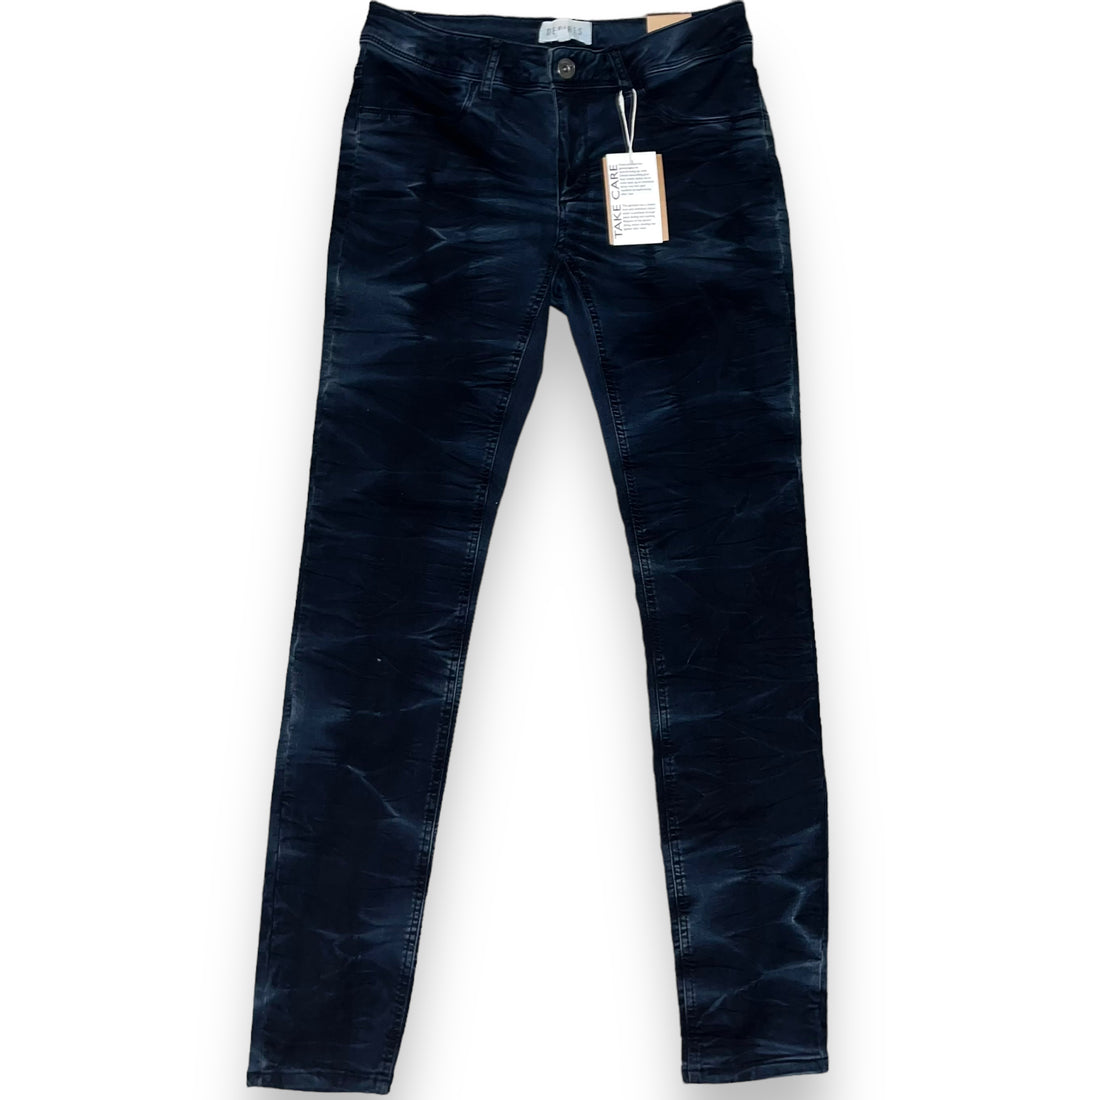 Jeans  Desires (32 USA  M)